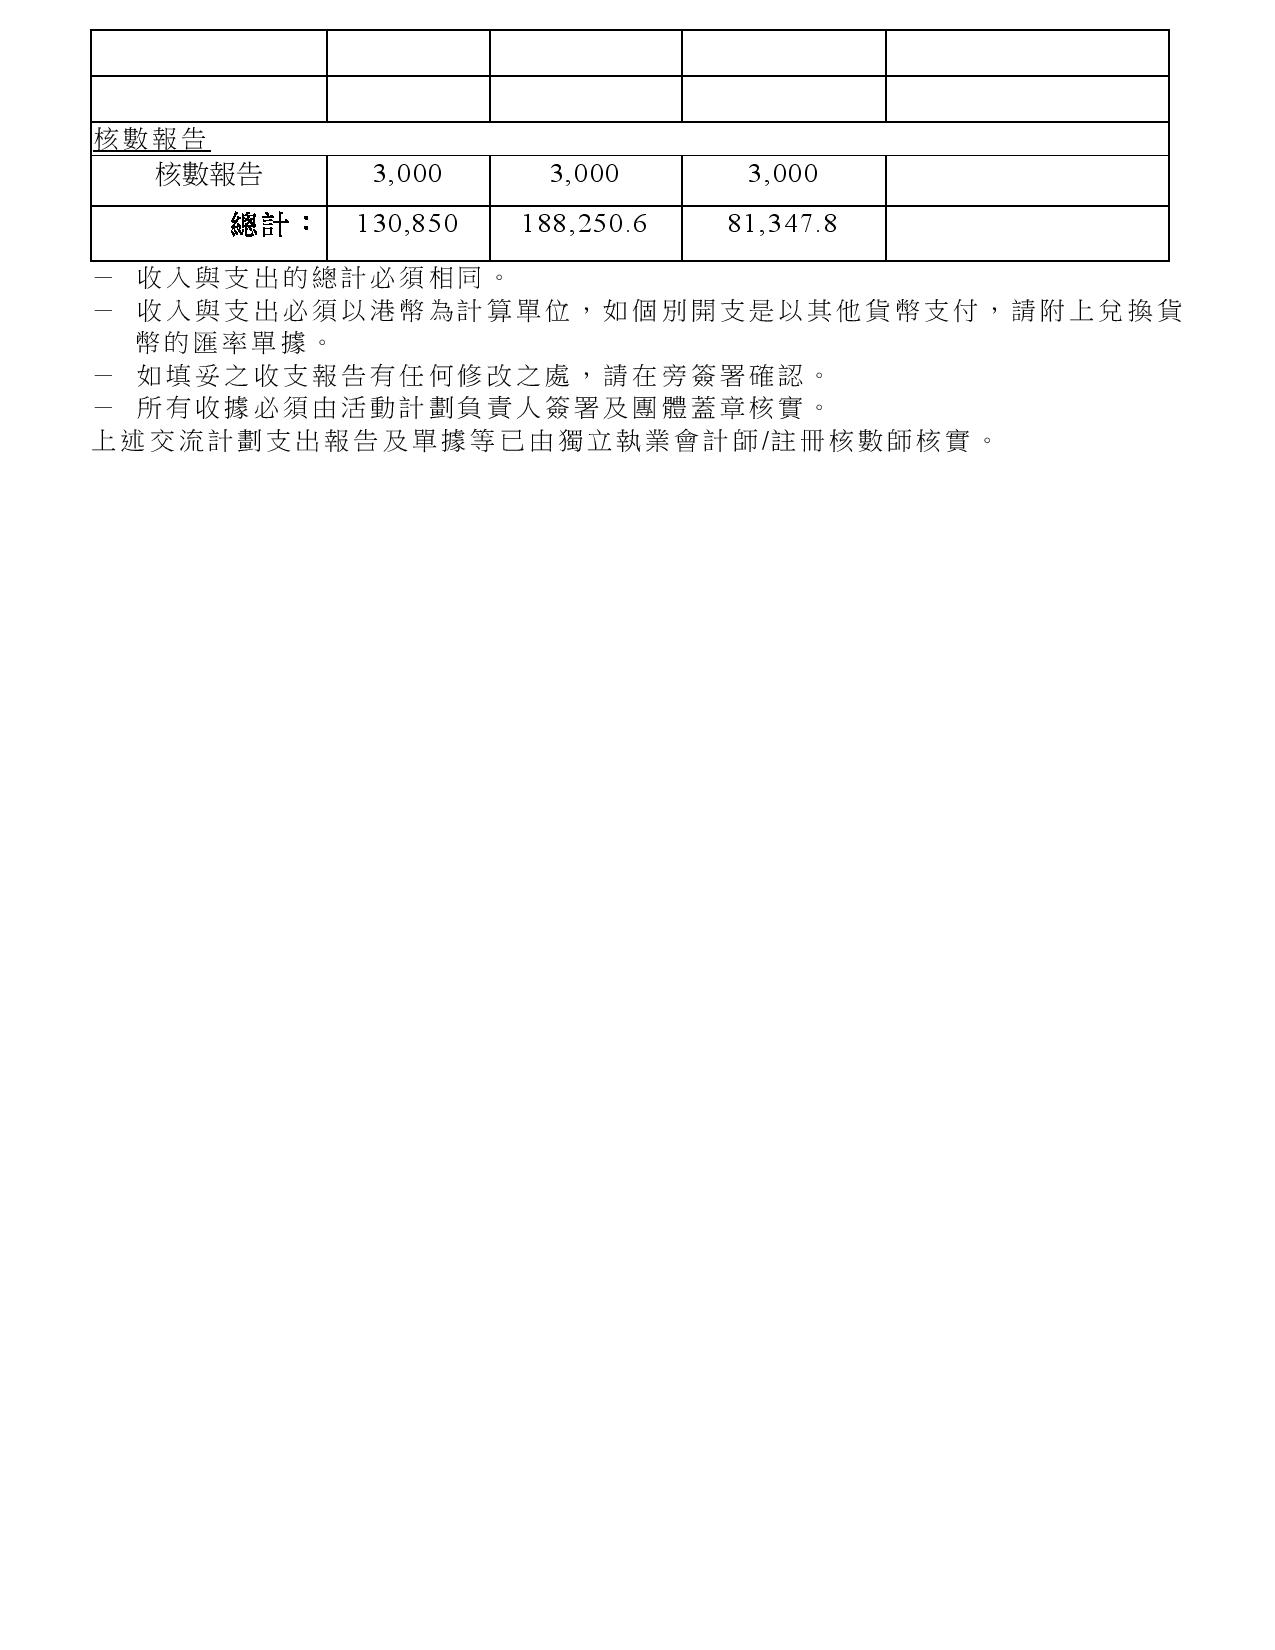 HKCFA_君主附件八 - 收支報告 (1)-page-003(P.3).jpg